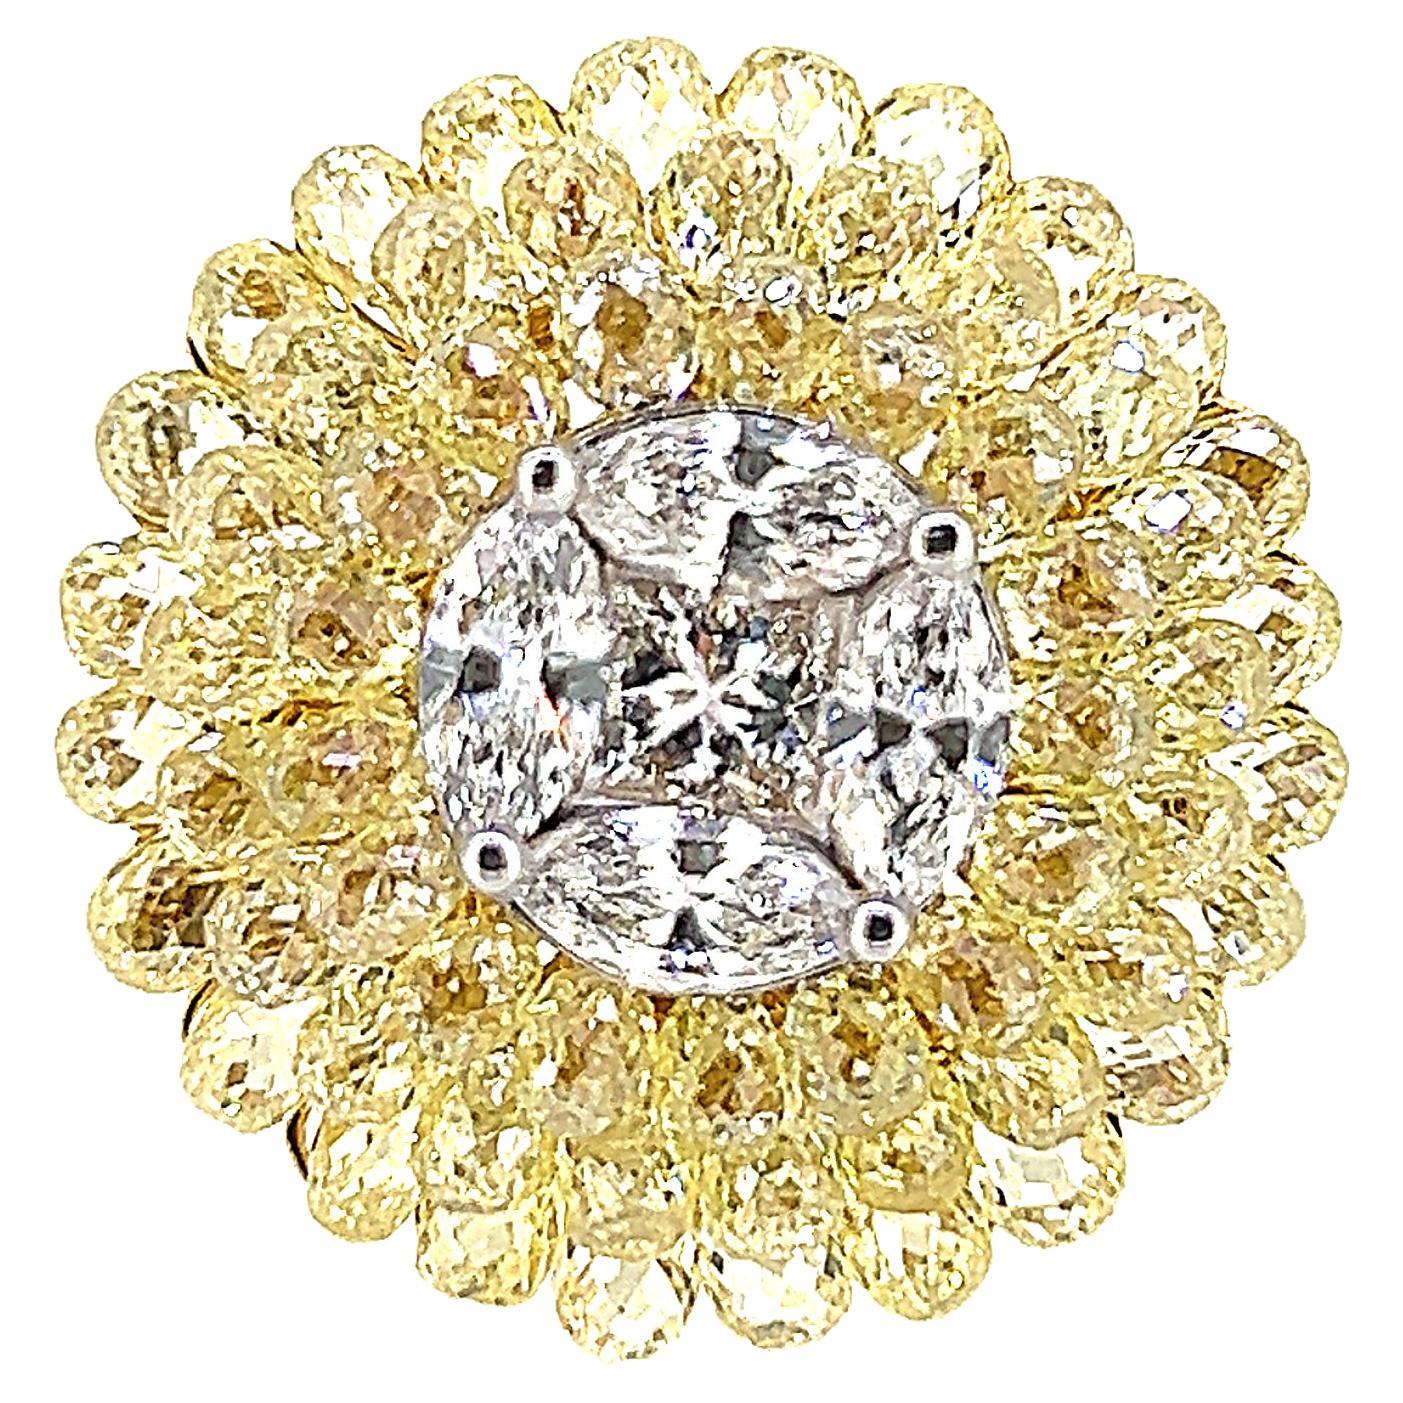 14.65 Carat Briolette Yellow Diamond and Diamond Flower Ring on 18K Yellow Gold